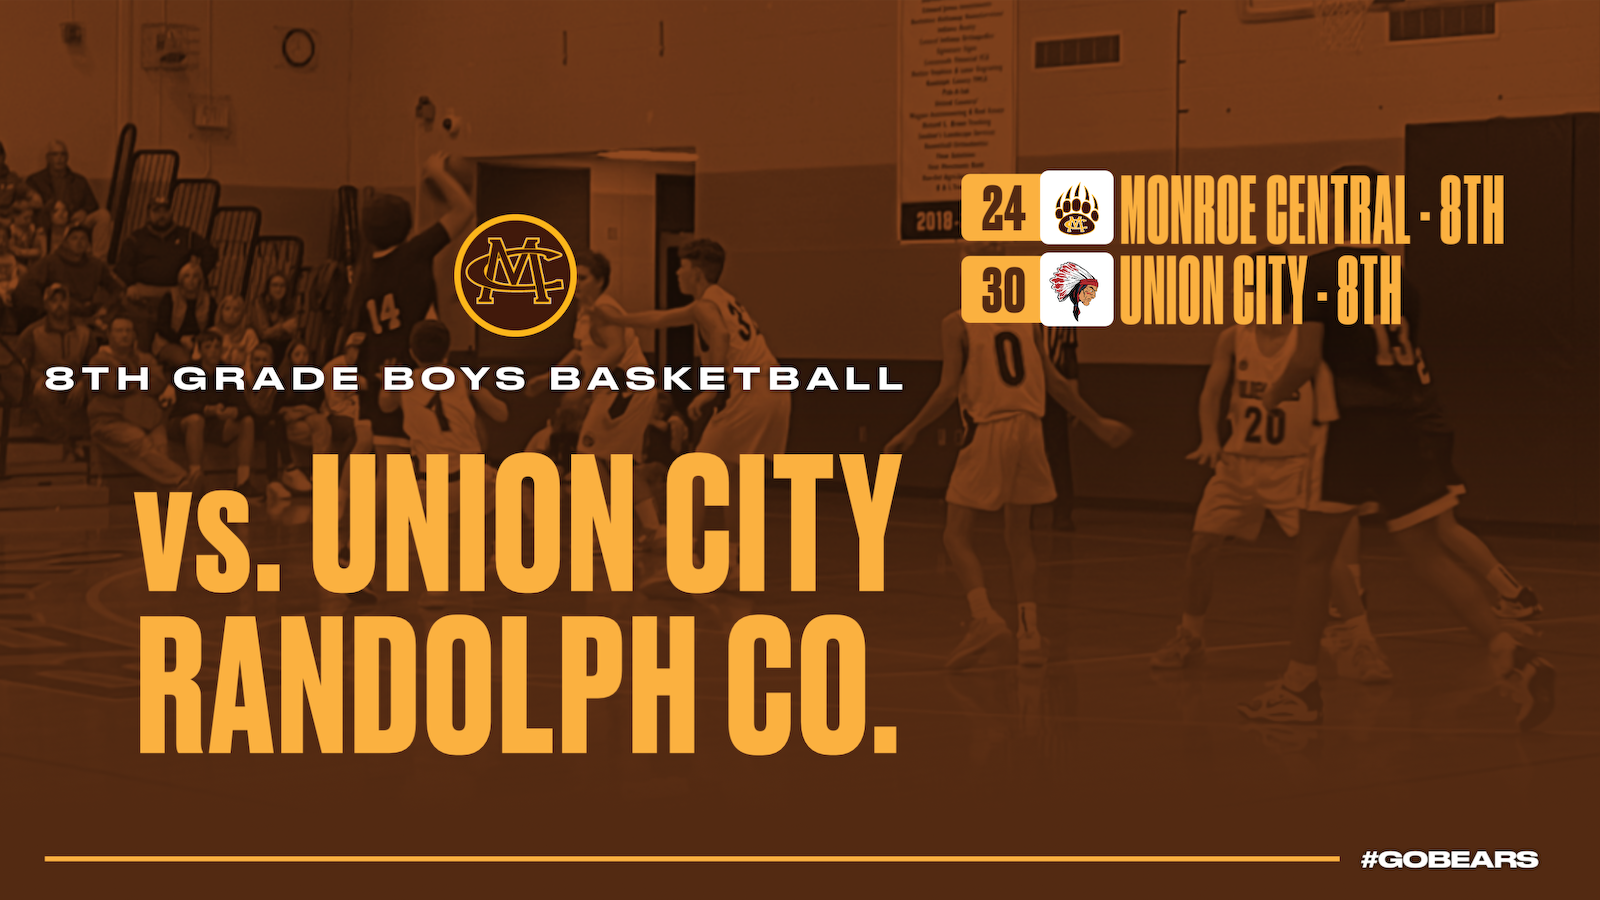 8th Grade Boys Basketball falls to Union City in the Randolph County Tournament cover photo